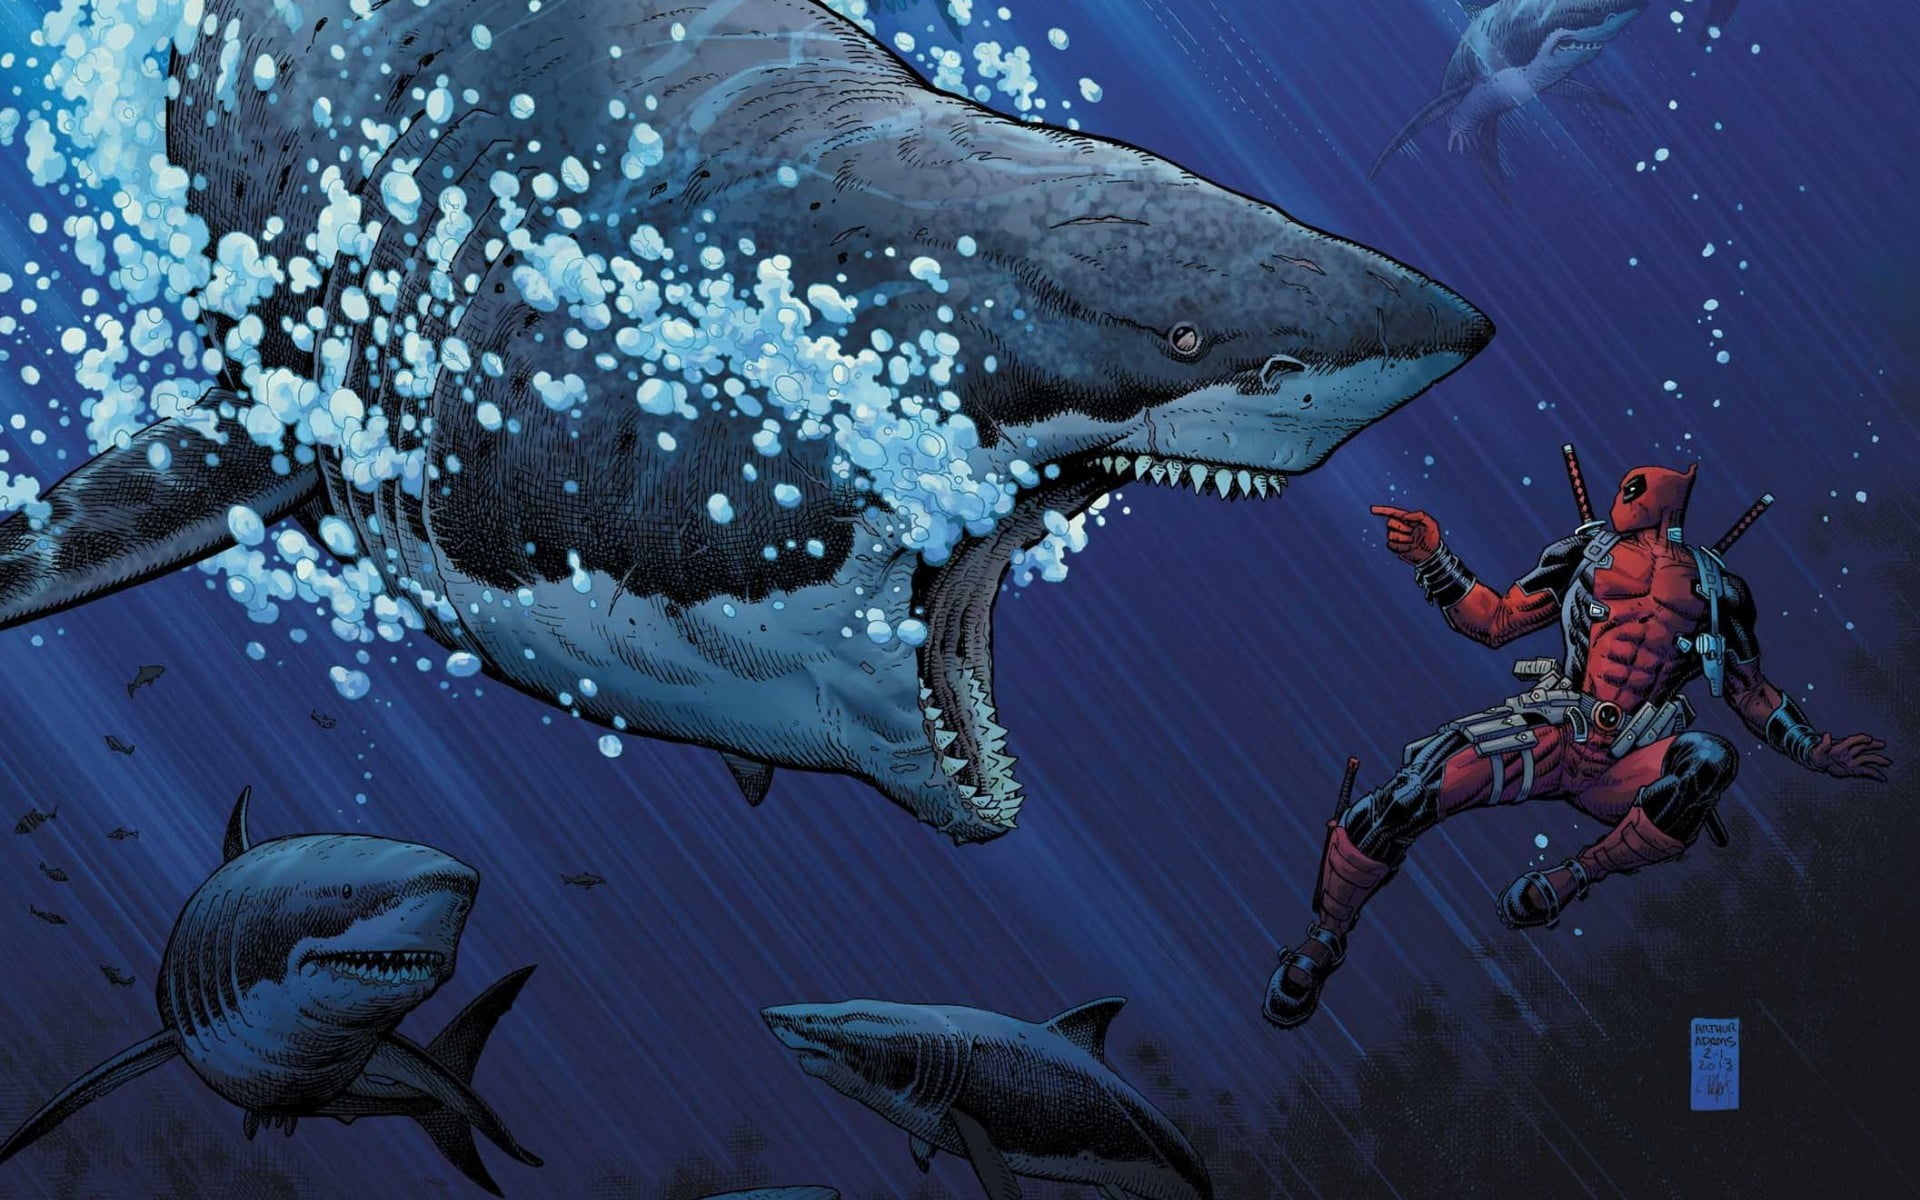 Deadpool wallpaper, shark, Marvel Comics, sea, water, animals in the wild